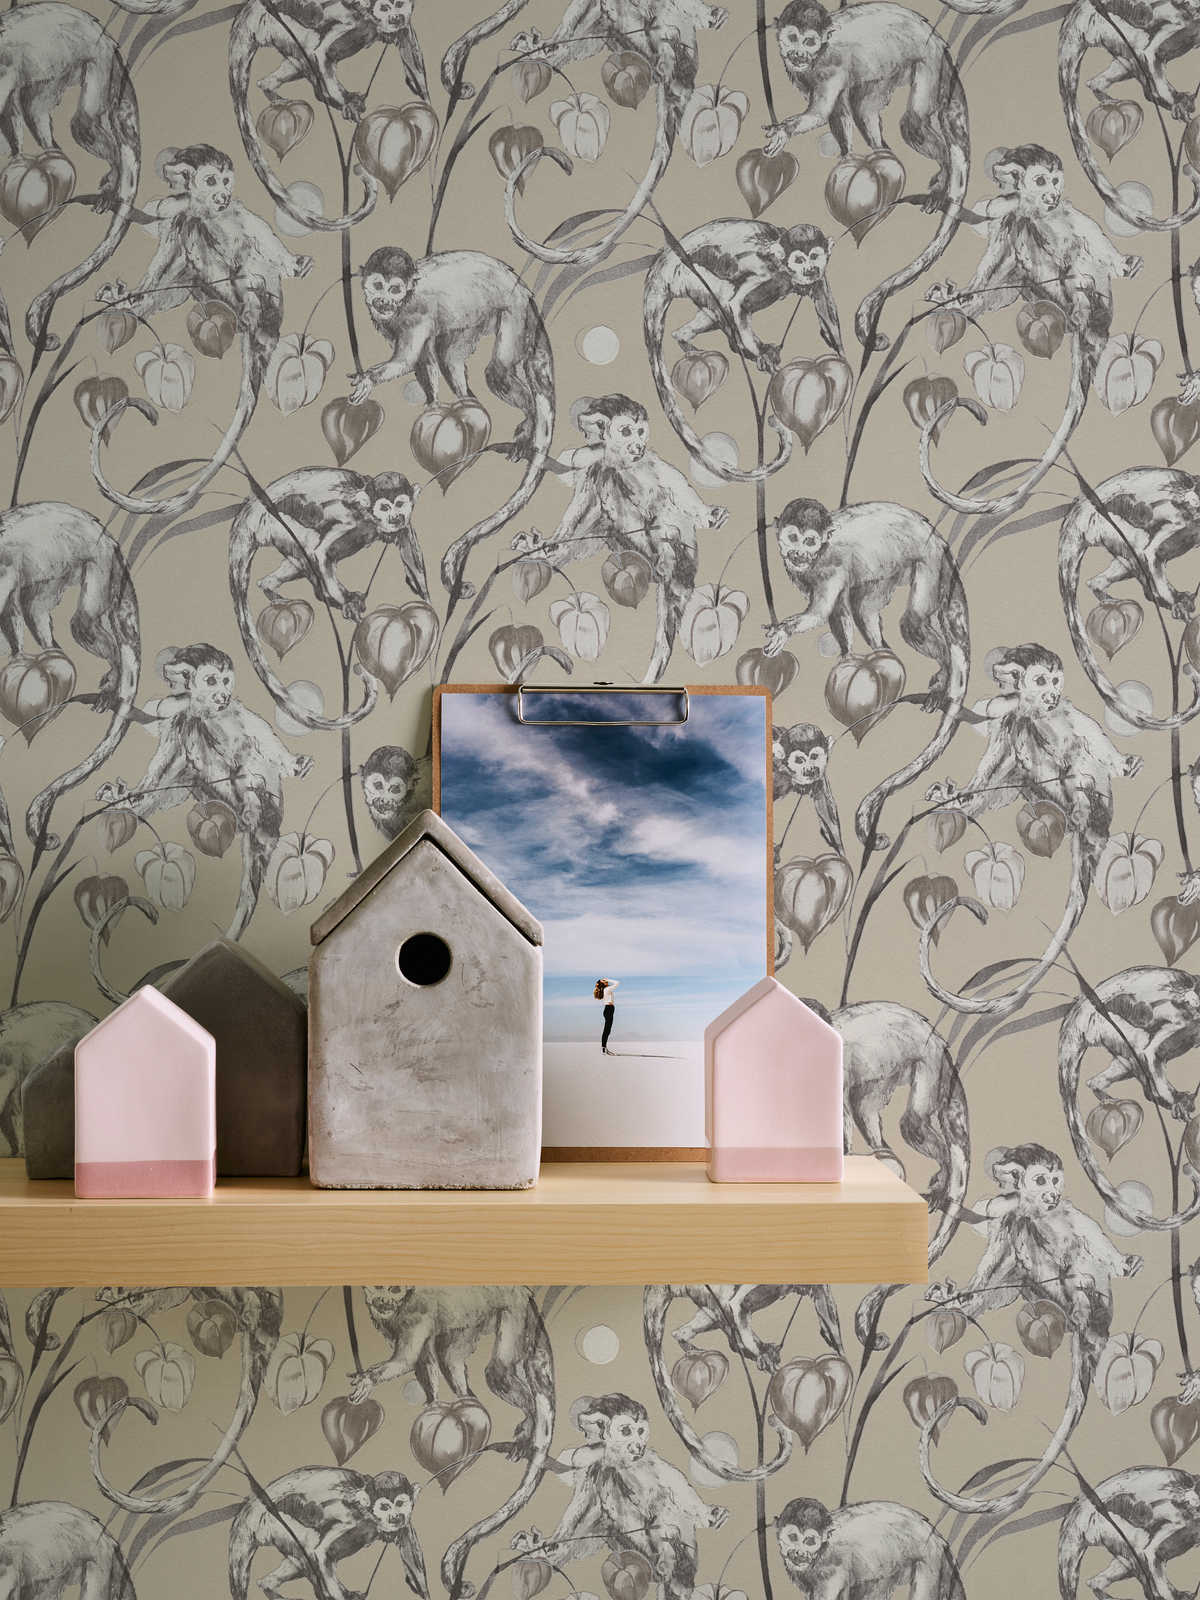             Cream wallpaper monkey & jungle design by MICHALSKY
        